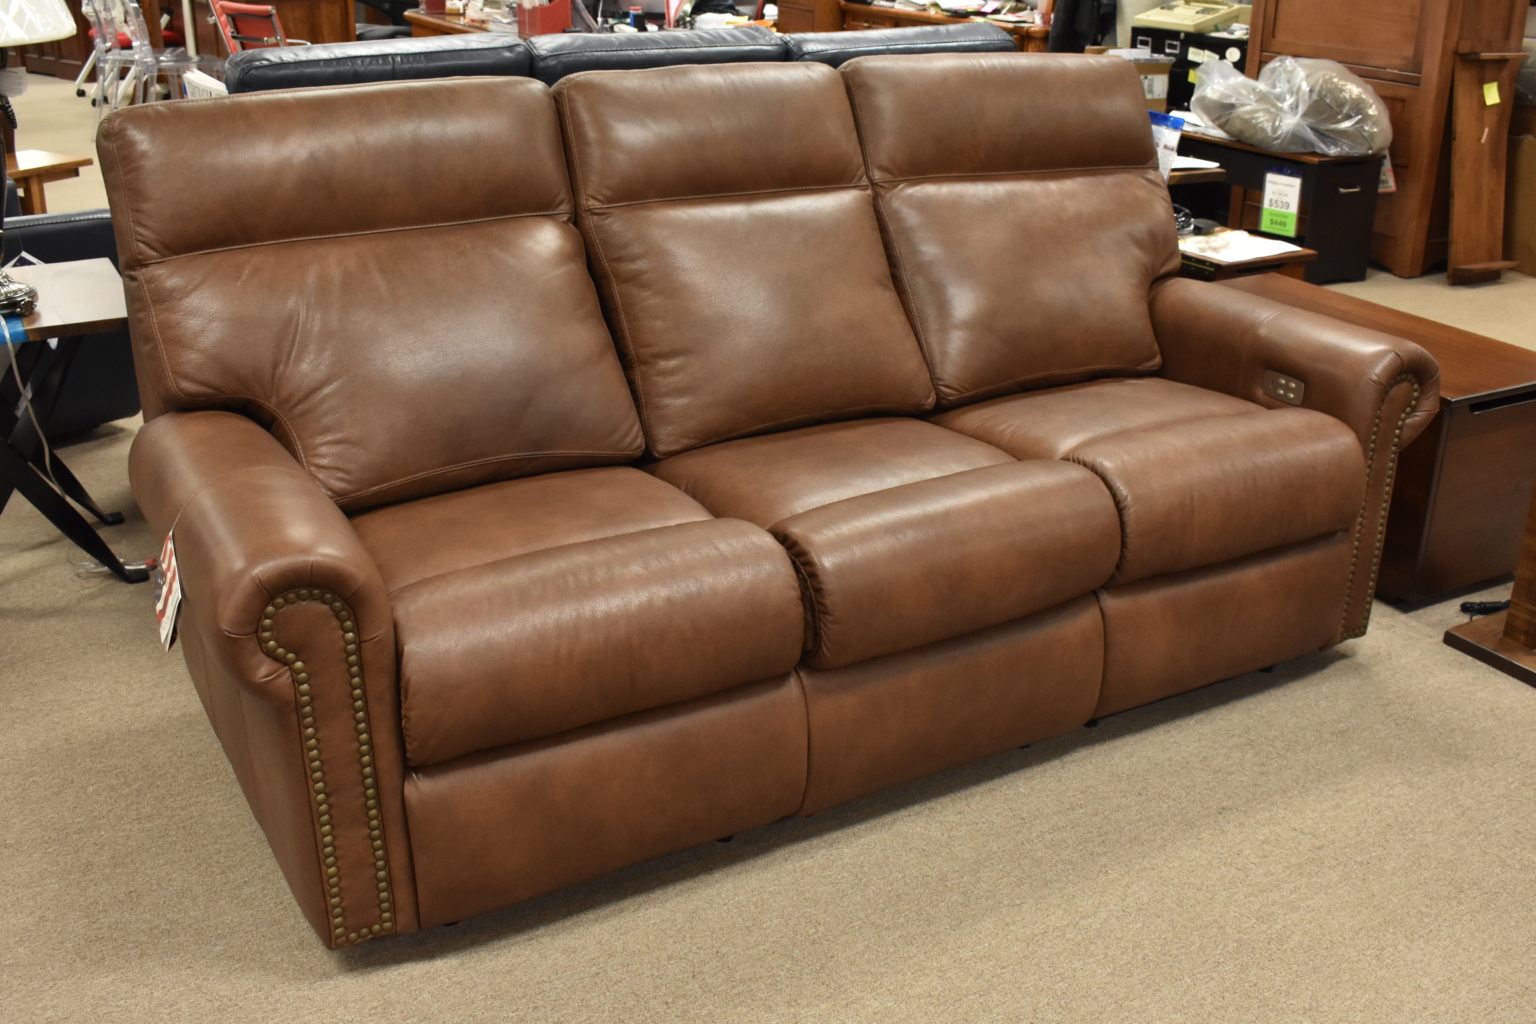 omnia leather sleeper sofa